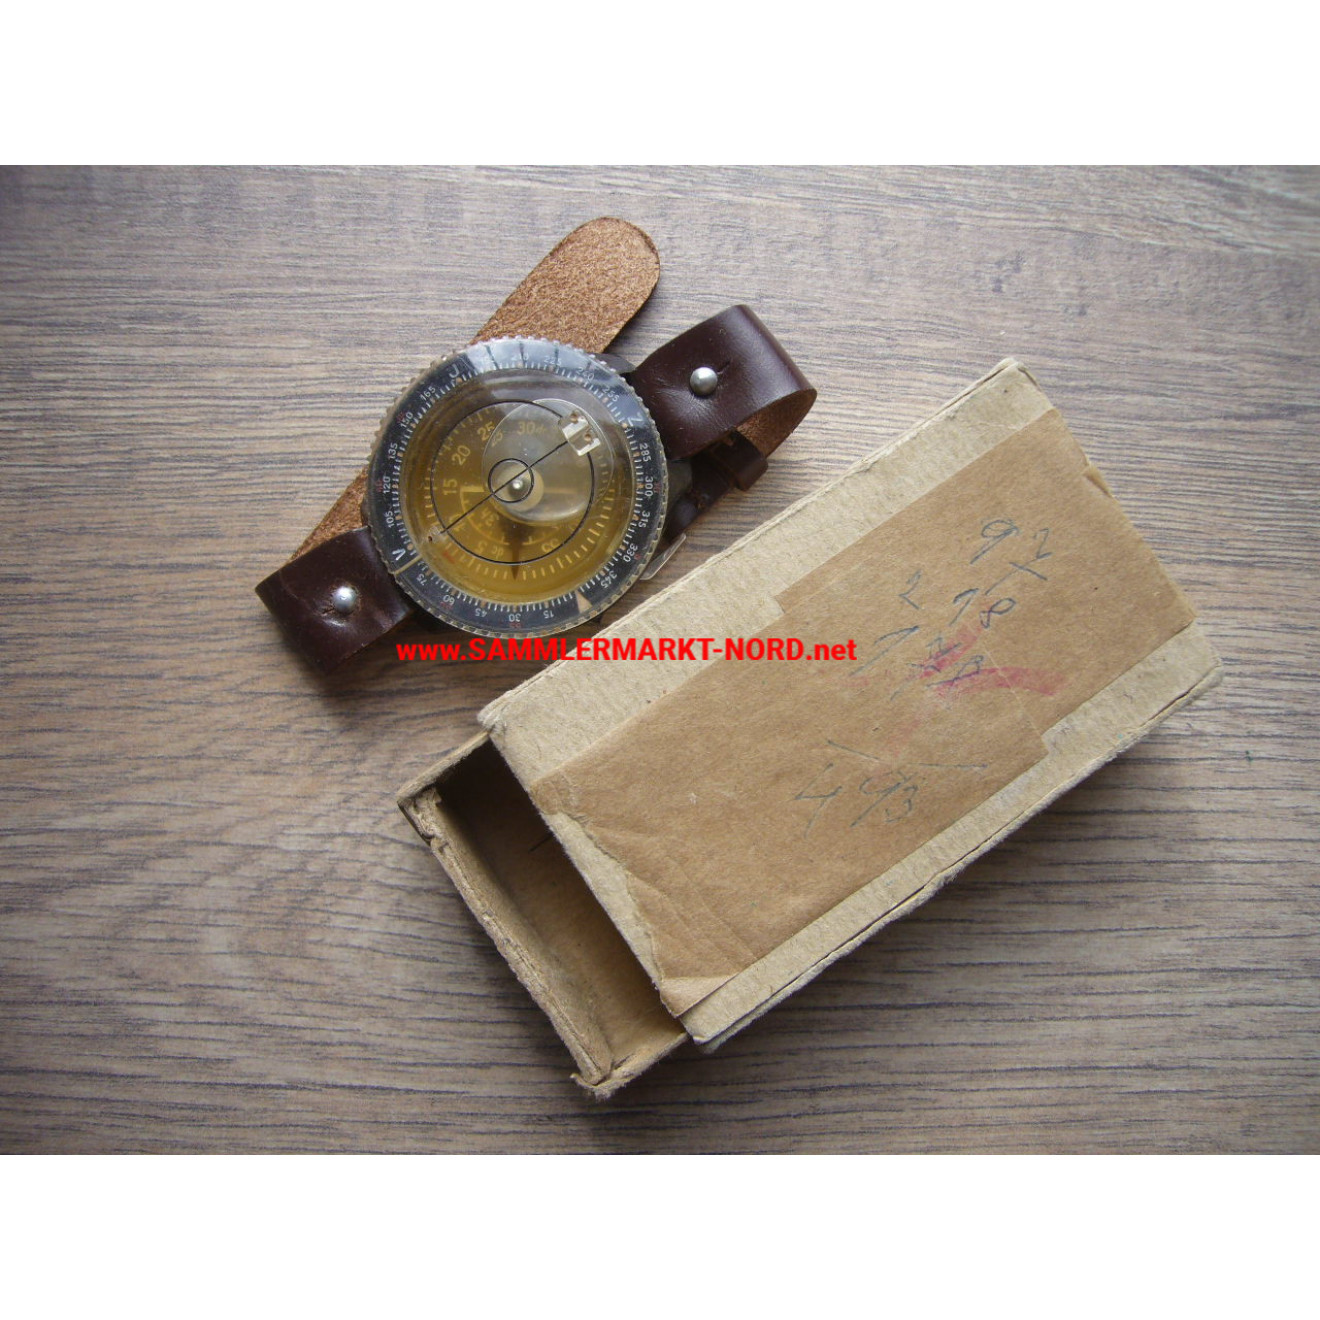 Luftwaffe arm compass (sbe) with original box